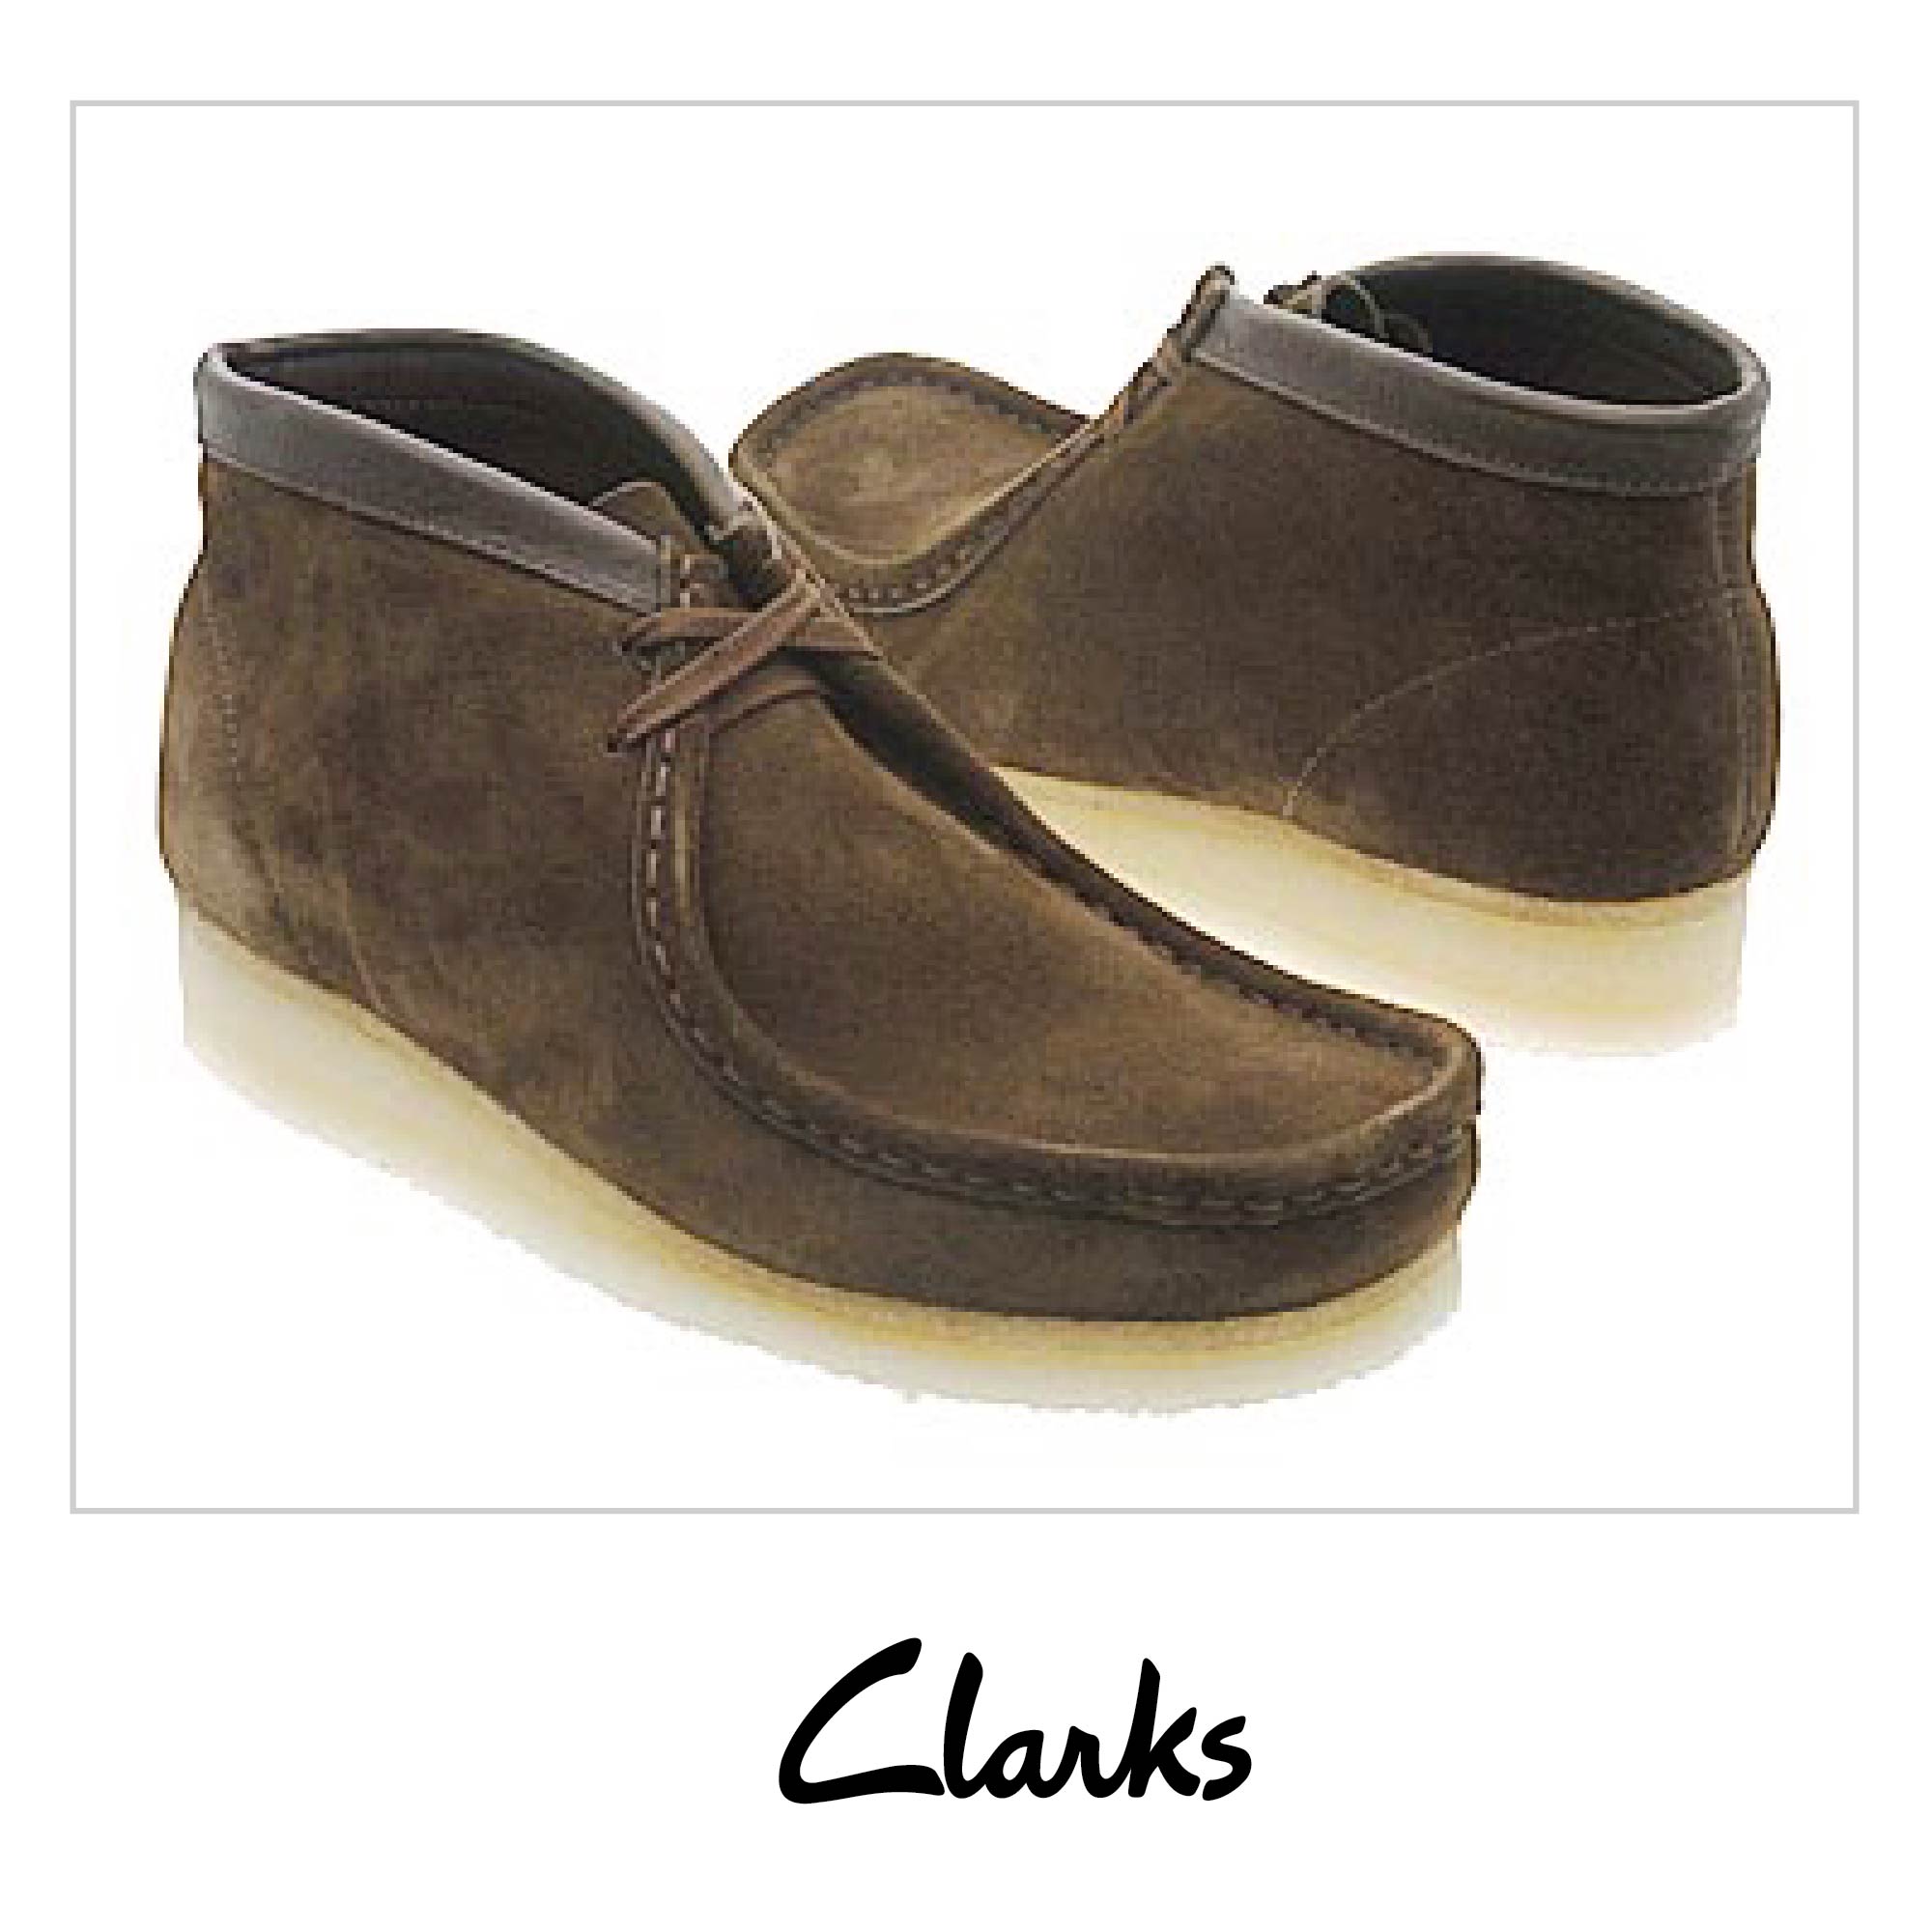 Clarks Panama på Twitter: "Modelo #Wallabee introducido por Lance Clark, un  mocasín #clásico de #Clarks #HistoriaClarks #StyledByClarks #Panama  http://t.co/PXuu6HuhNc" / Twitter